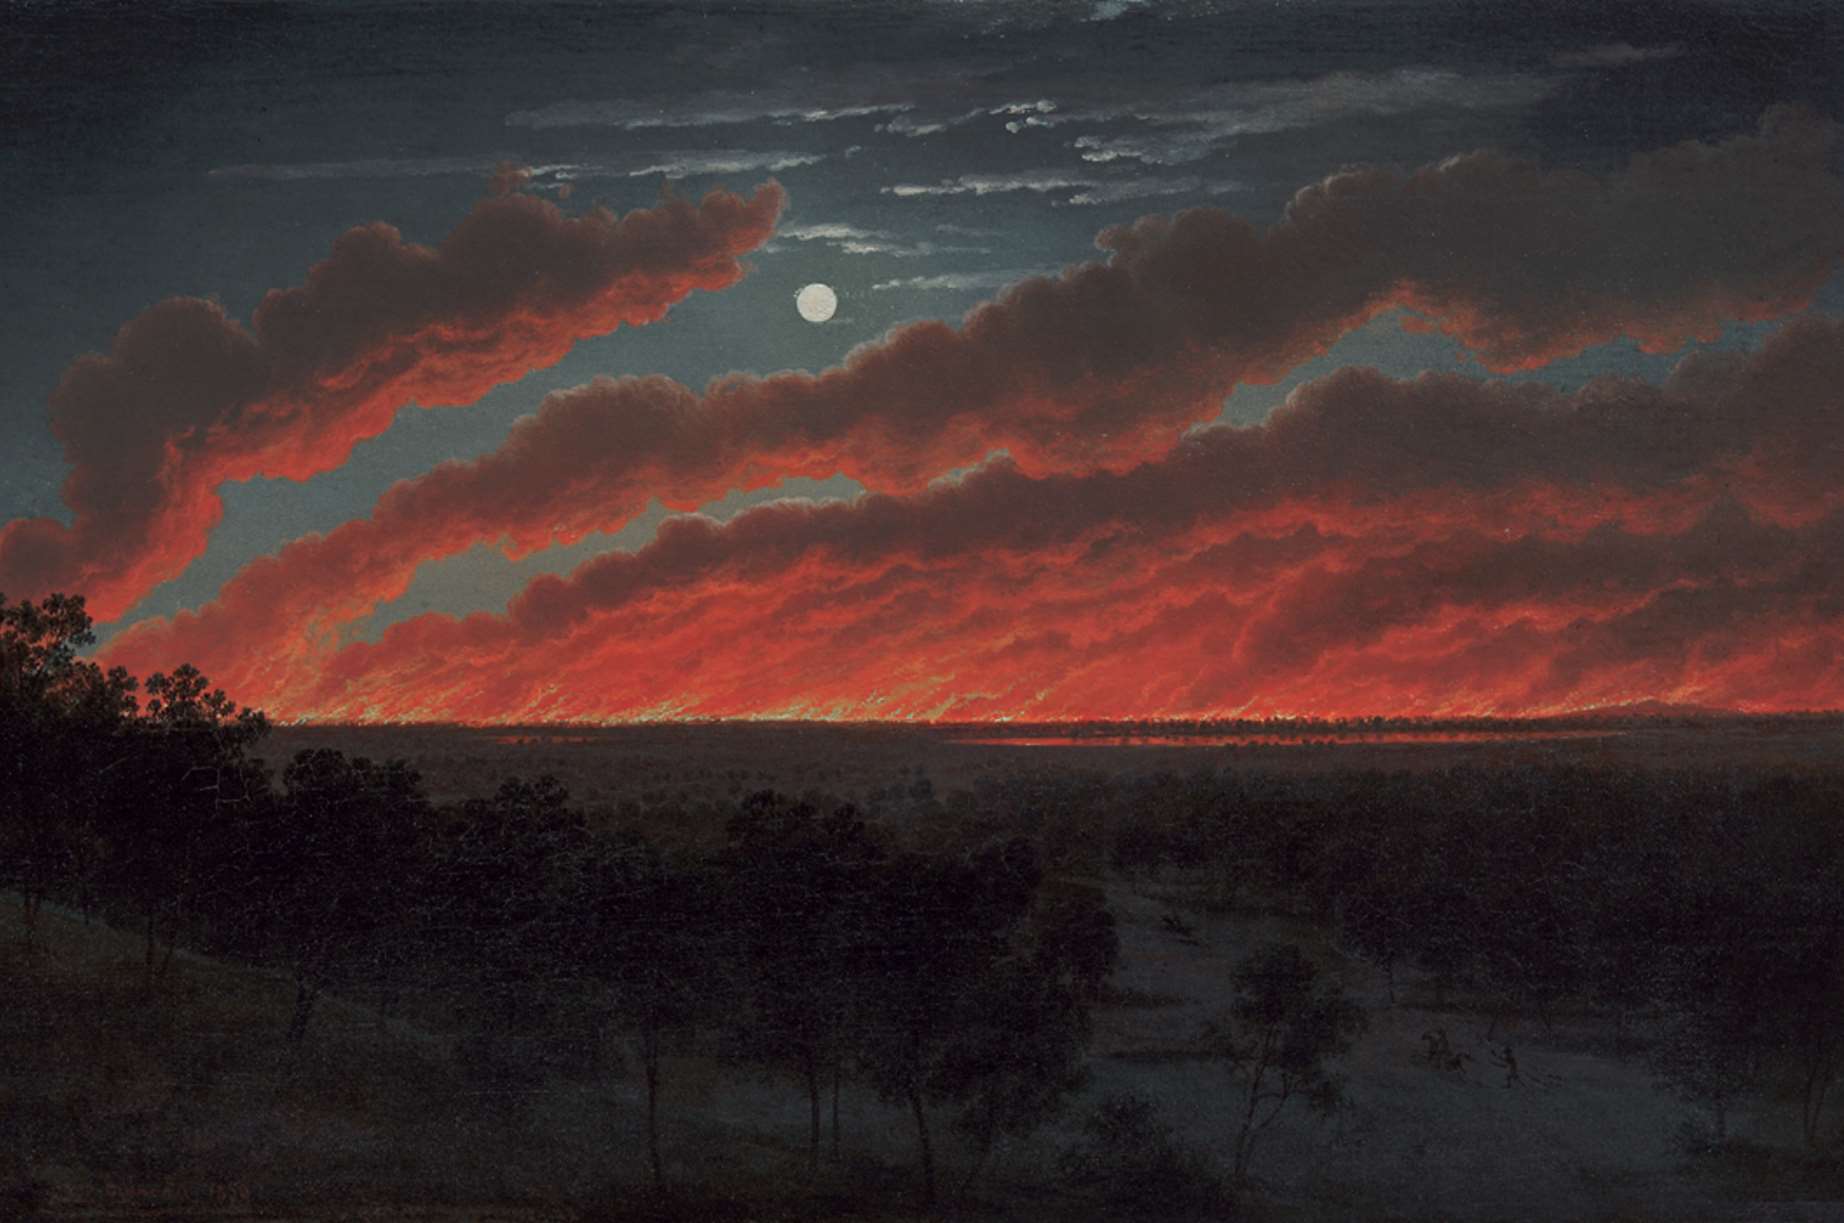 Eugene von Guerard's Bush Fire, 1859. Oil on canvas. Copyright: Royal Academy of Arts